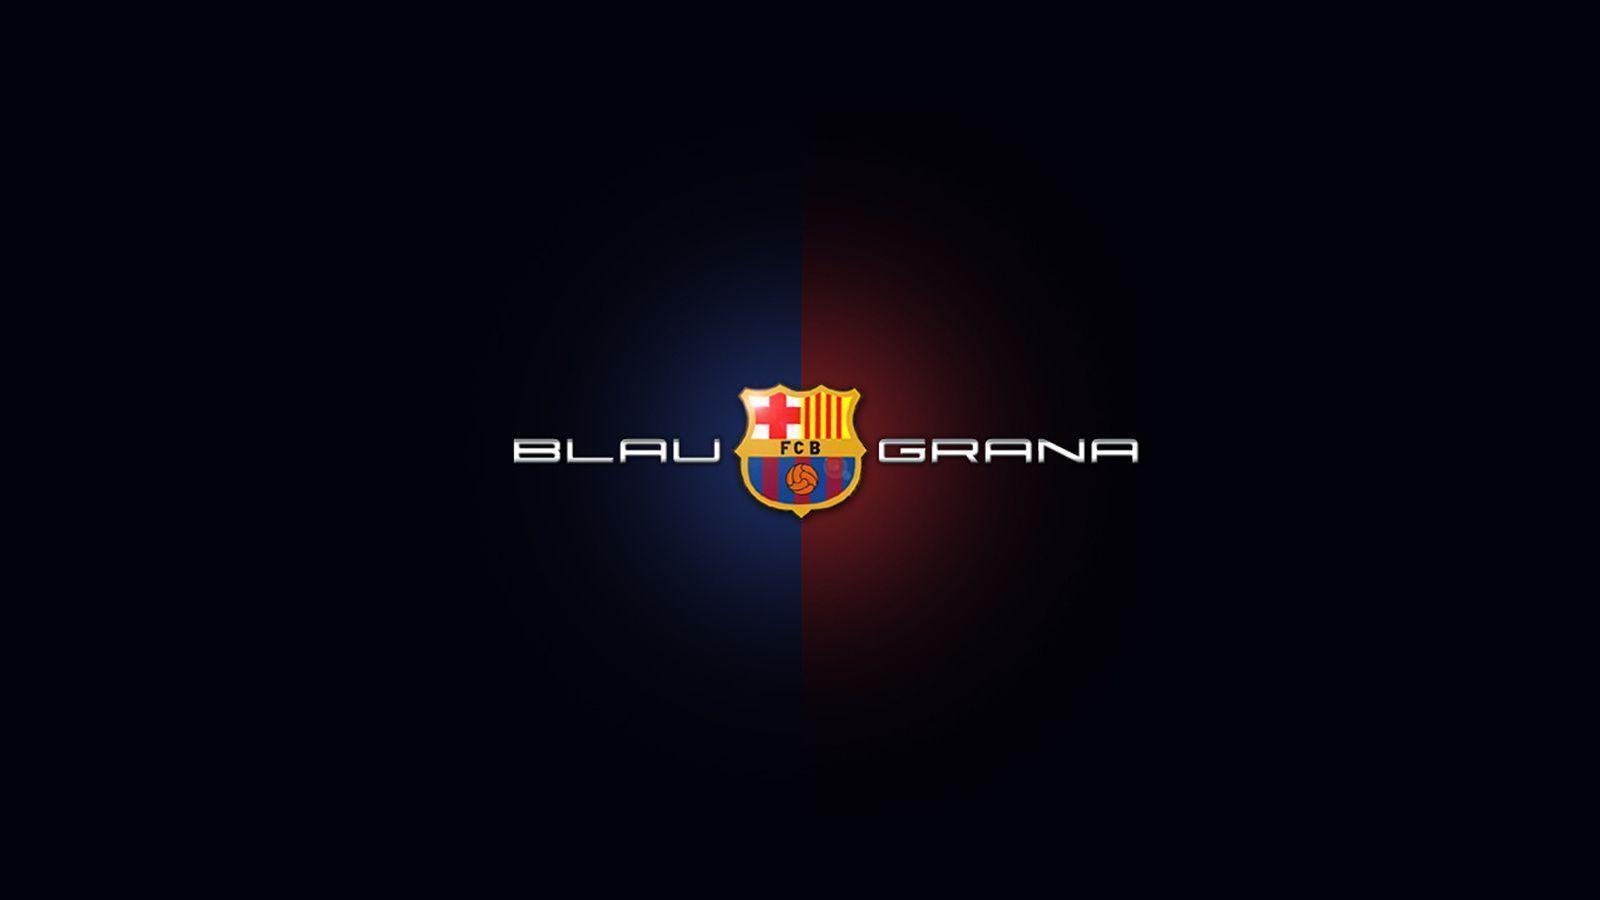 Barcelona Logo Wallpaper Background. Download High Quality